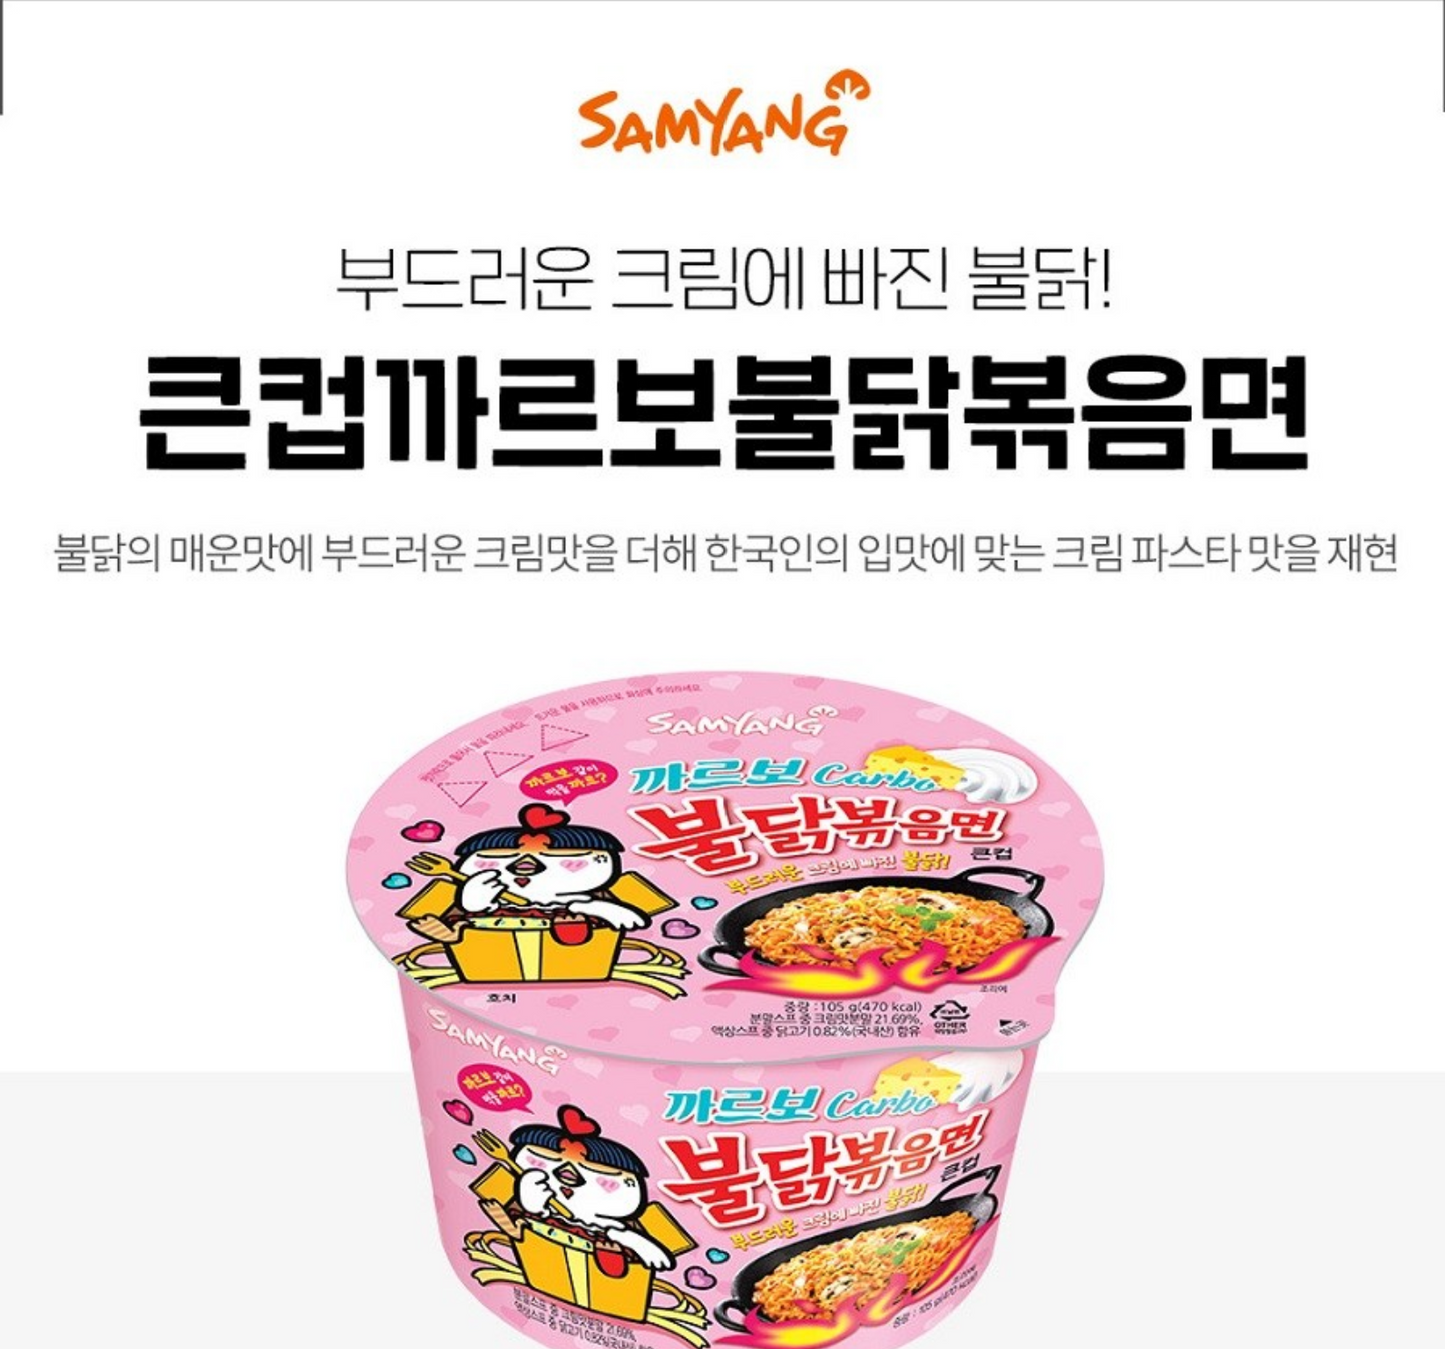 Samyang Big Cup Carbo Buldak Fried Noodles (삼양 큰컵 까르보 불닭볶음면)